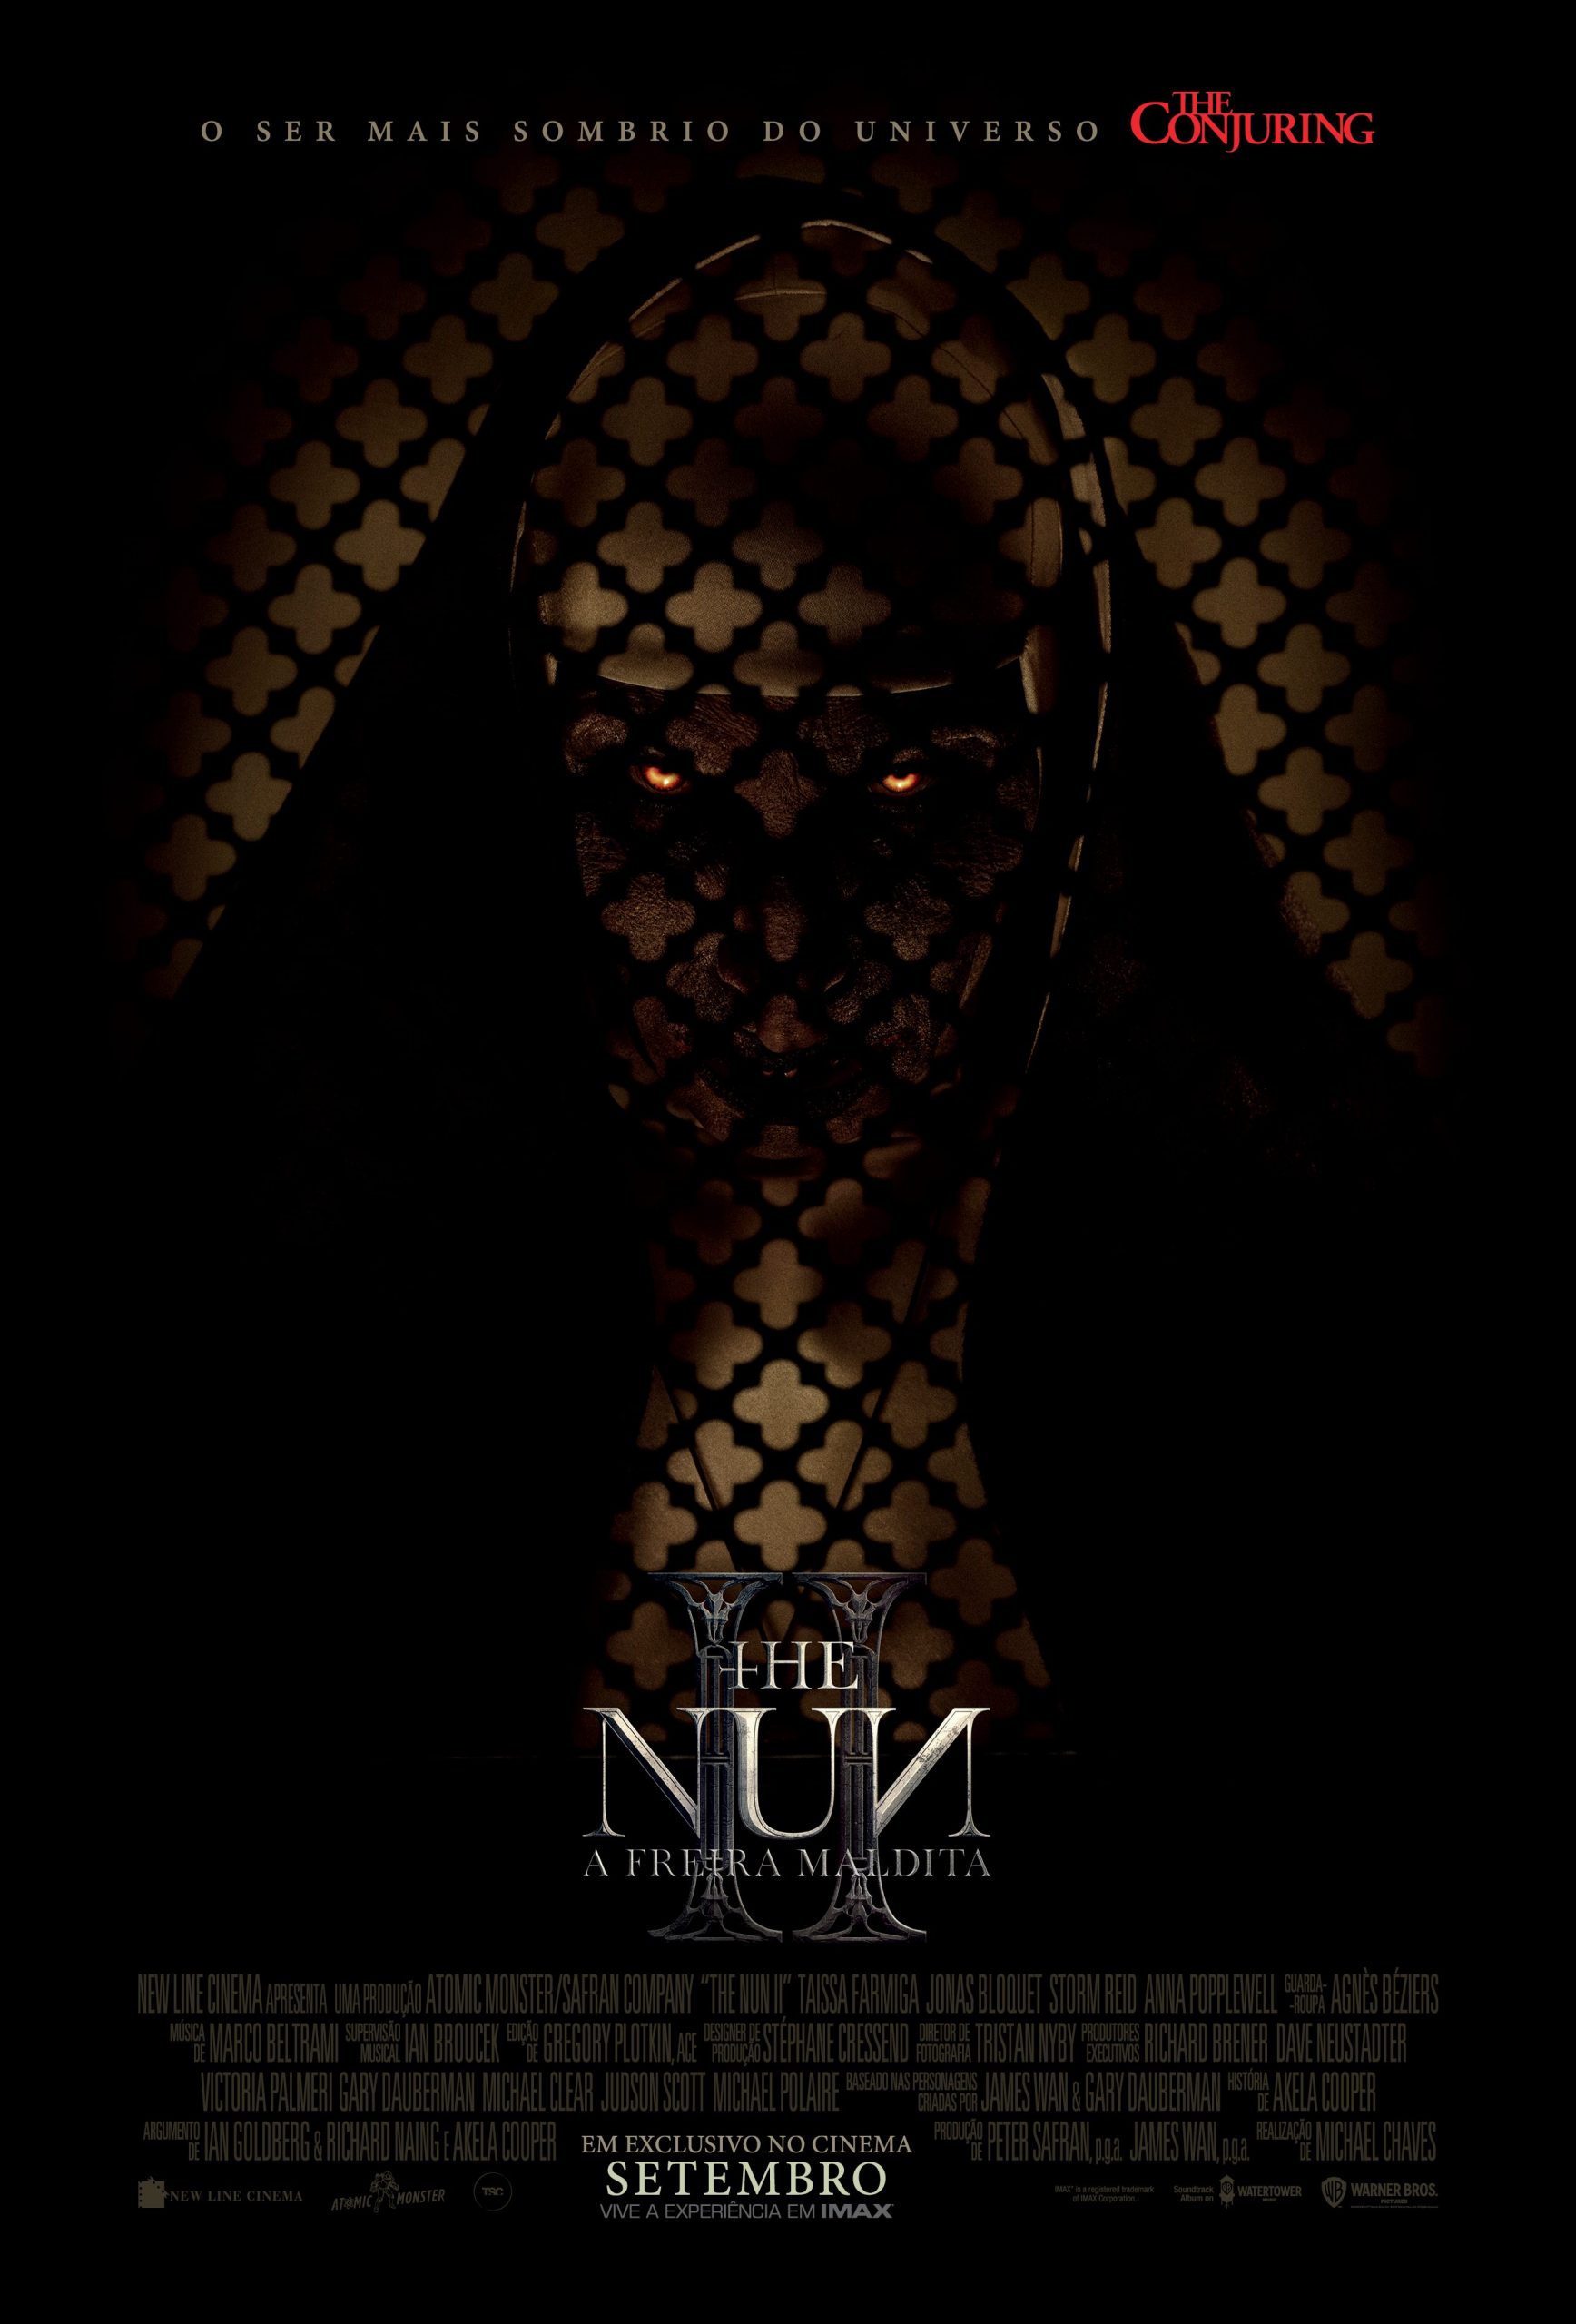 The Nun: A Freira Maldita II